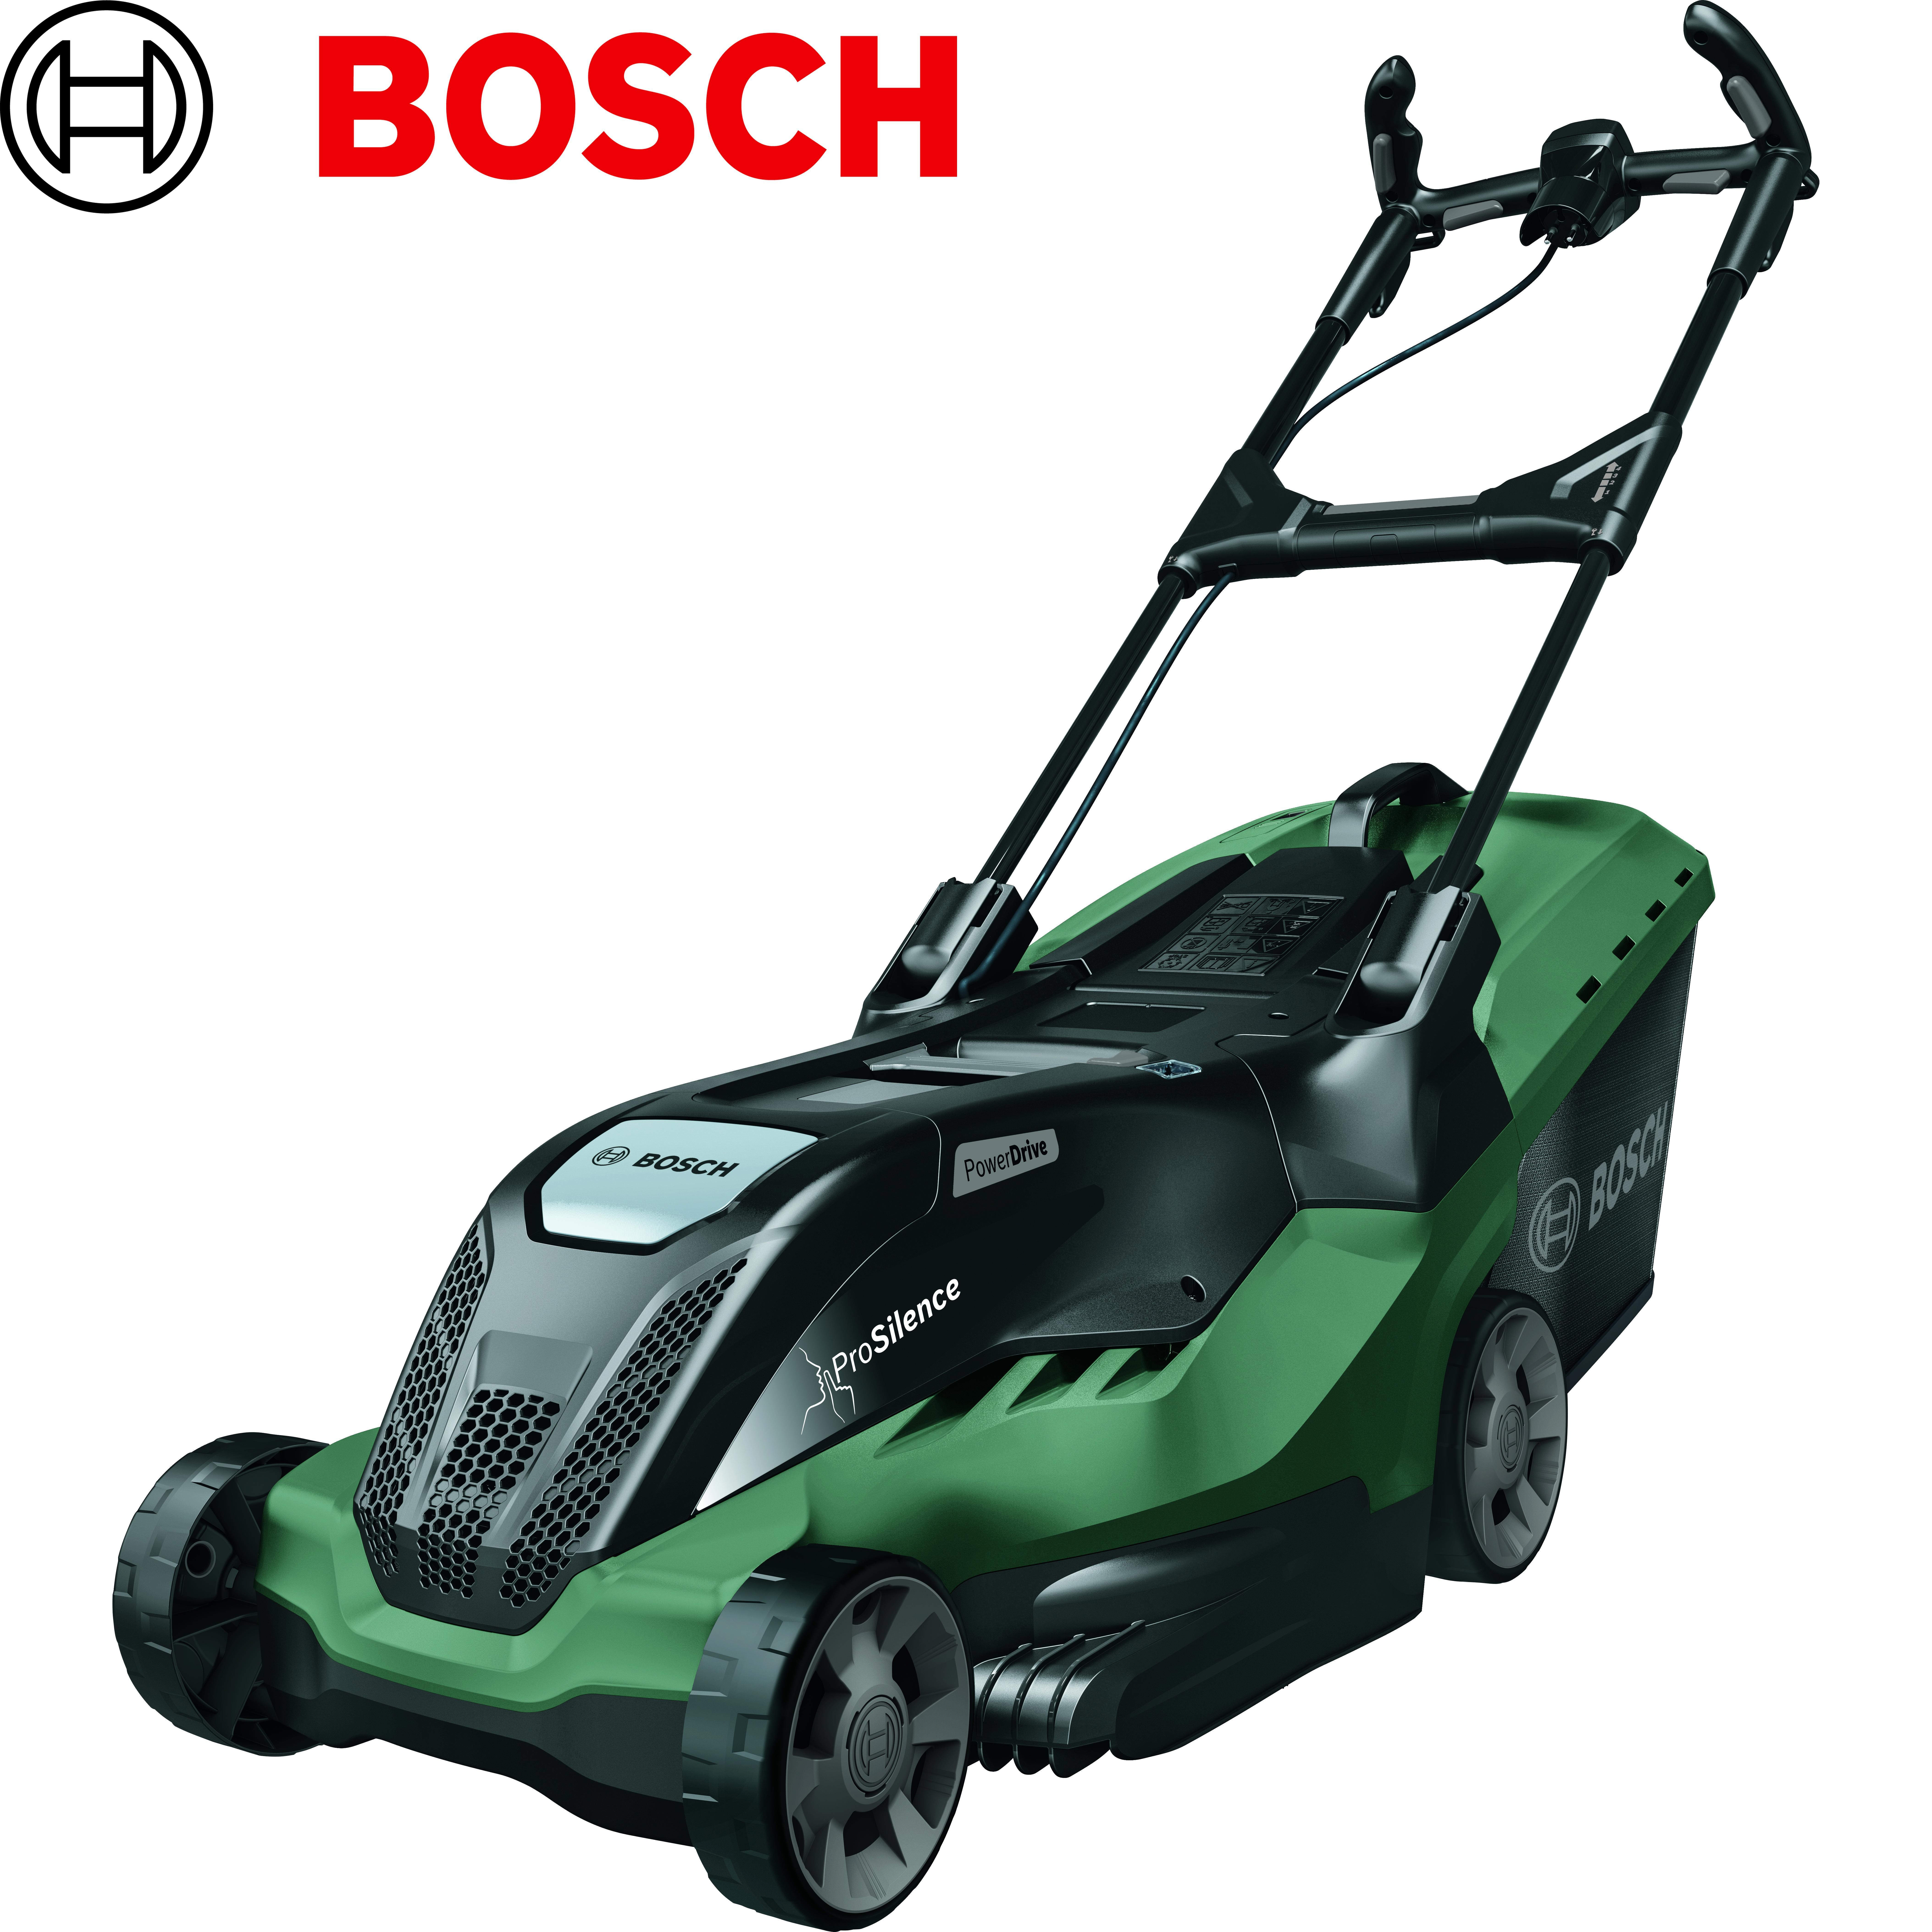 Bosch rotak купить. Bosch ADVANCEDROTAK 760 (0.600.8b9.301). Газонокосилка Bosch ADVANCEDROTAK 660. Газонокосилка Bosch ADVANCEDROTAK 760. Газонокосилка Bosch ADVANCEDROTAK 750.